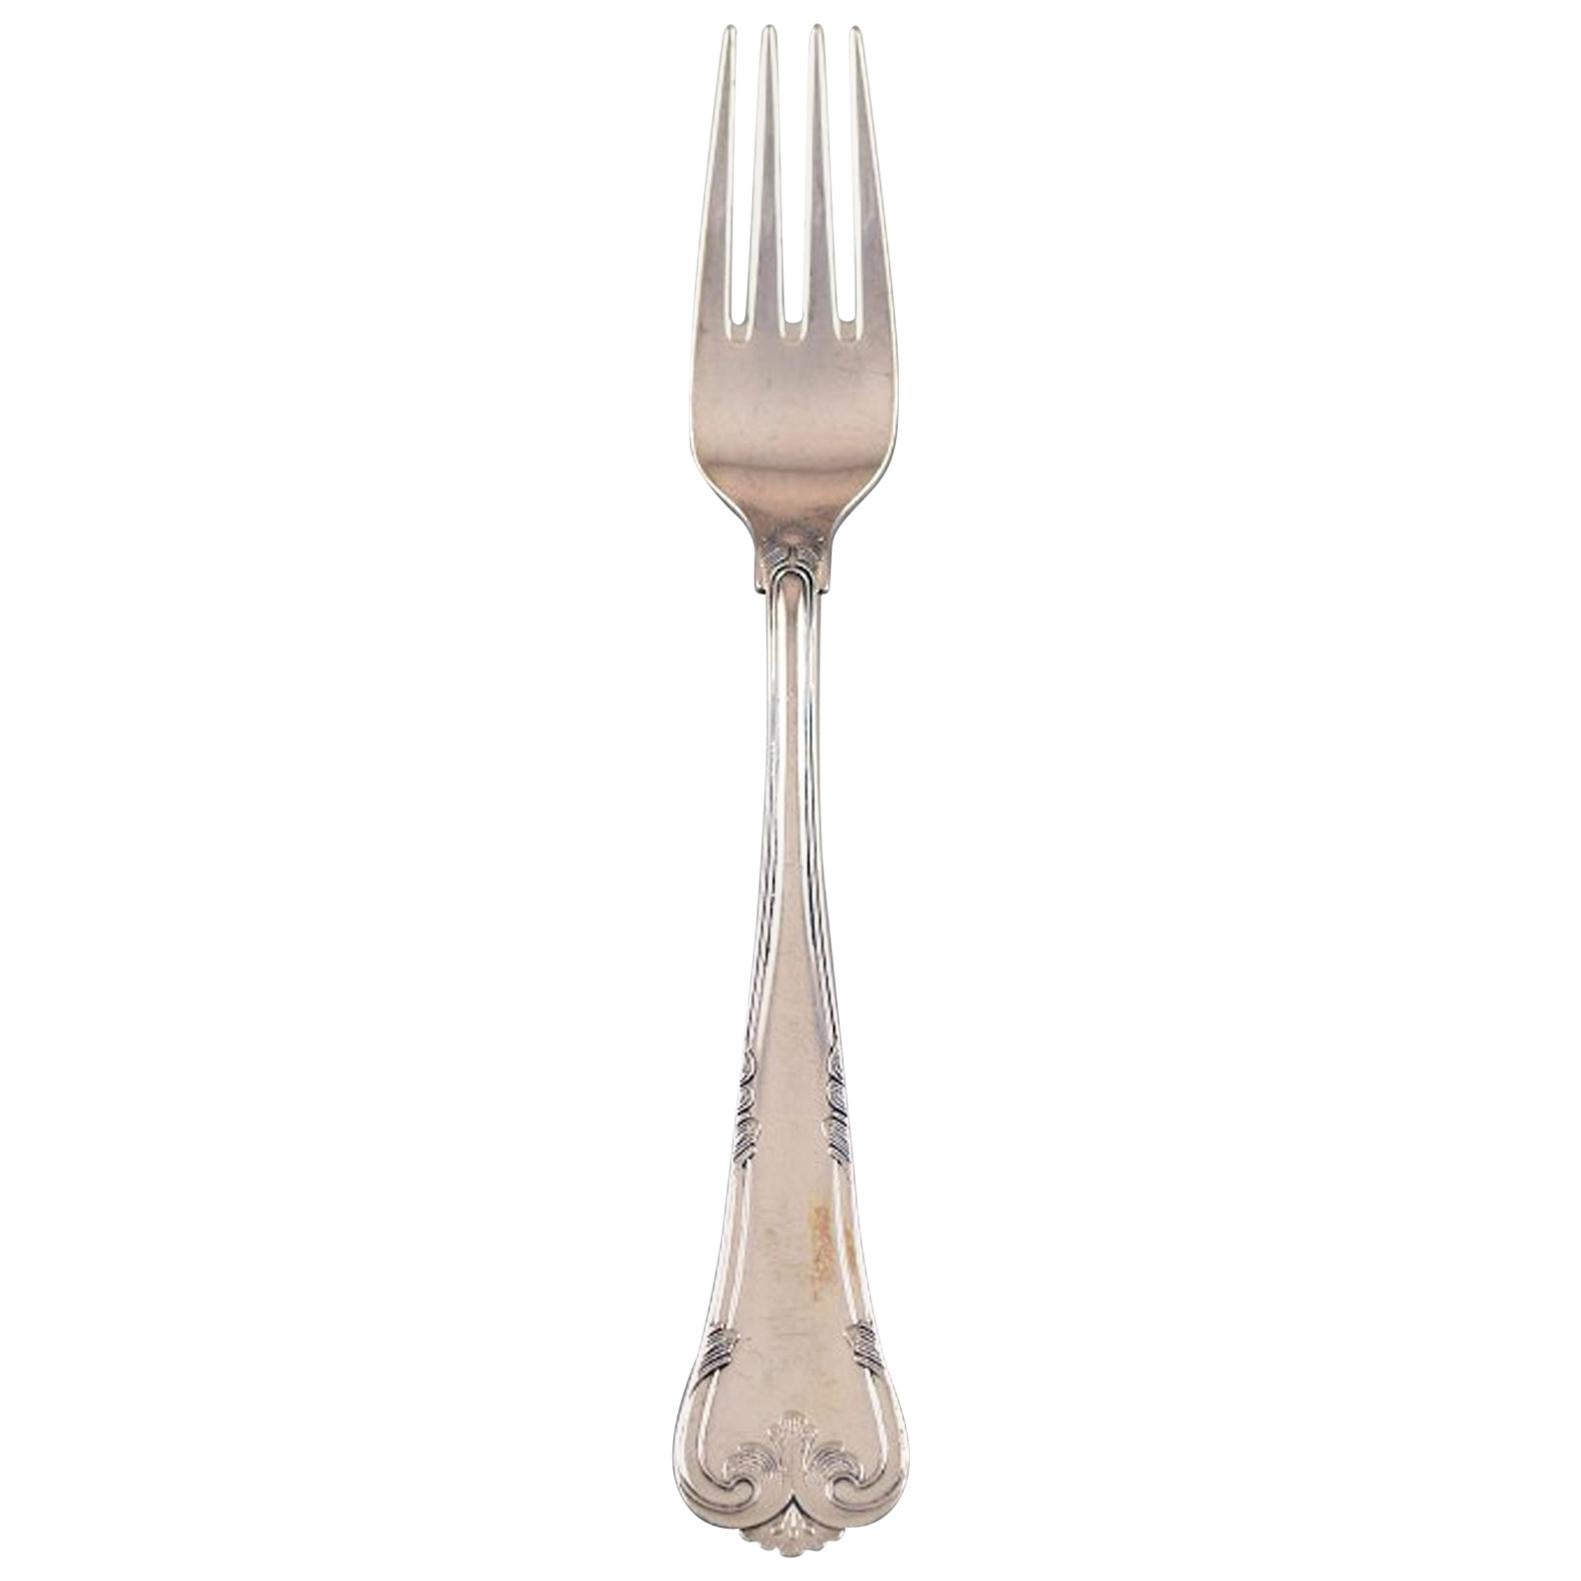 Cohr "Herregaard" Lunch Fork, Cutlery in Silver, 3 Forks in Stock For Sale